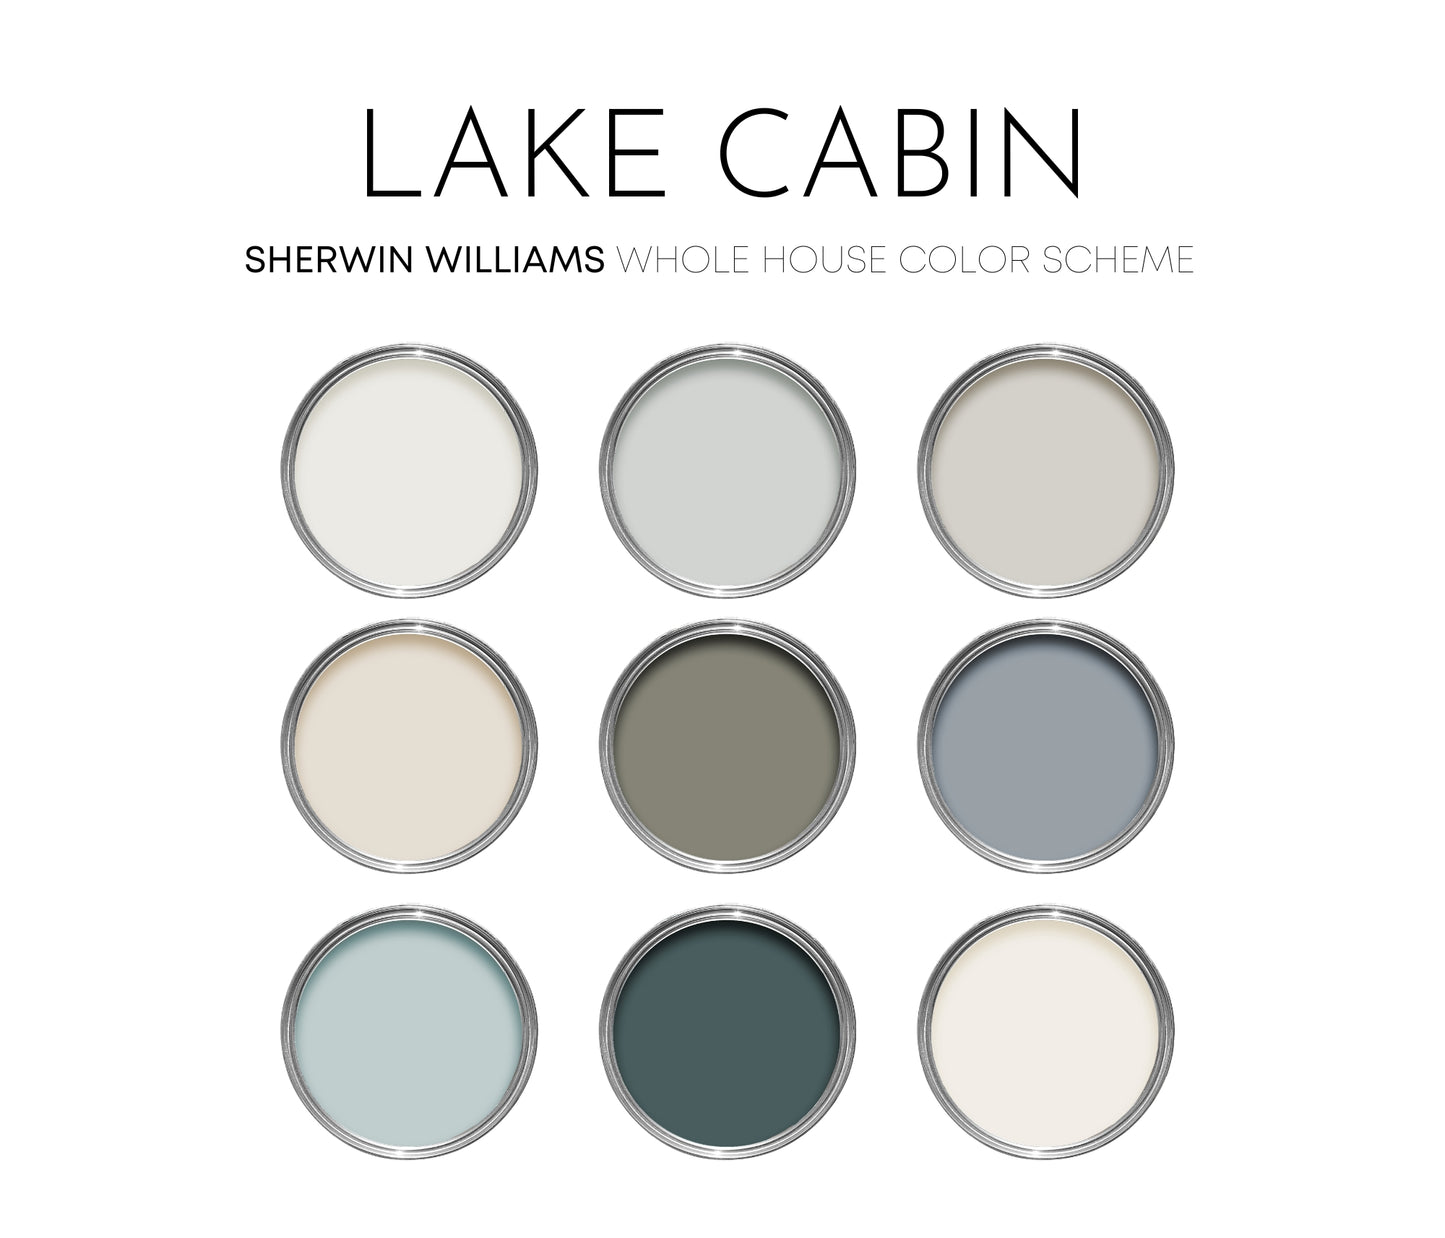 Lake Cabin Sherwin Williams Paint Palette, Calm Neutral Interior Paint Colors, Beach House Coastal Color Scheme, Mountain Road